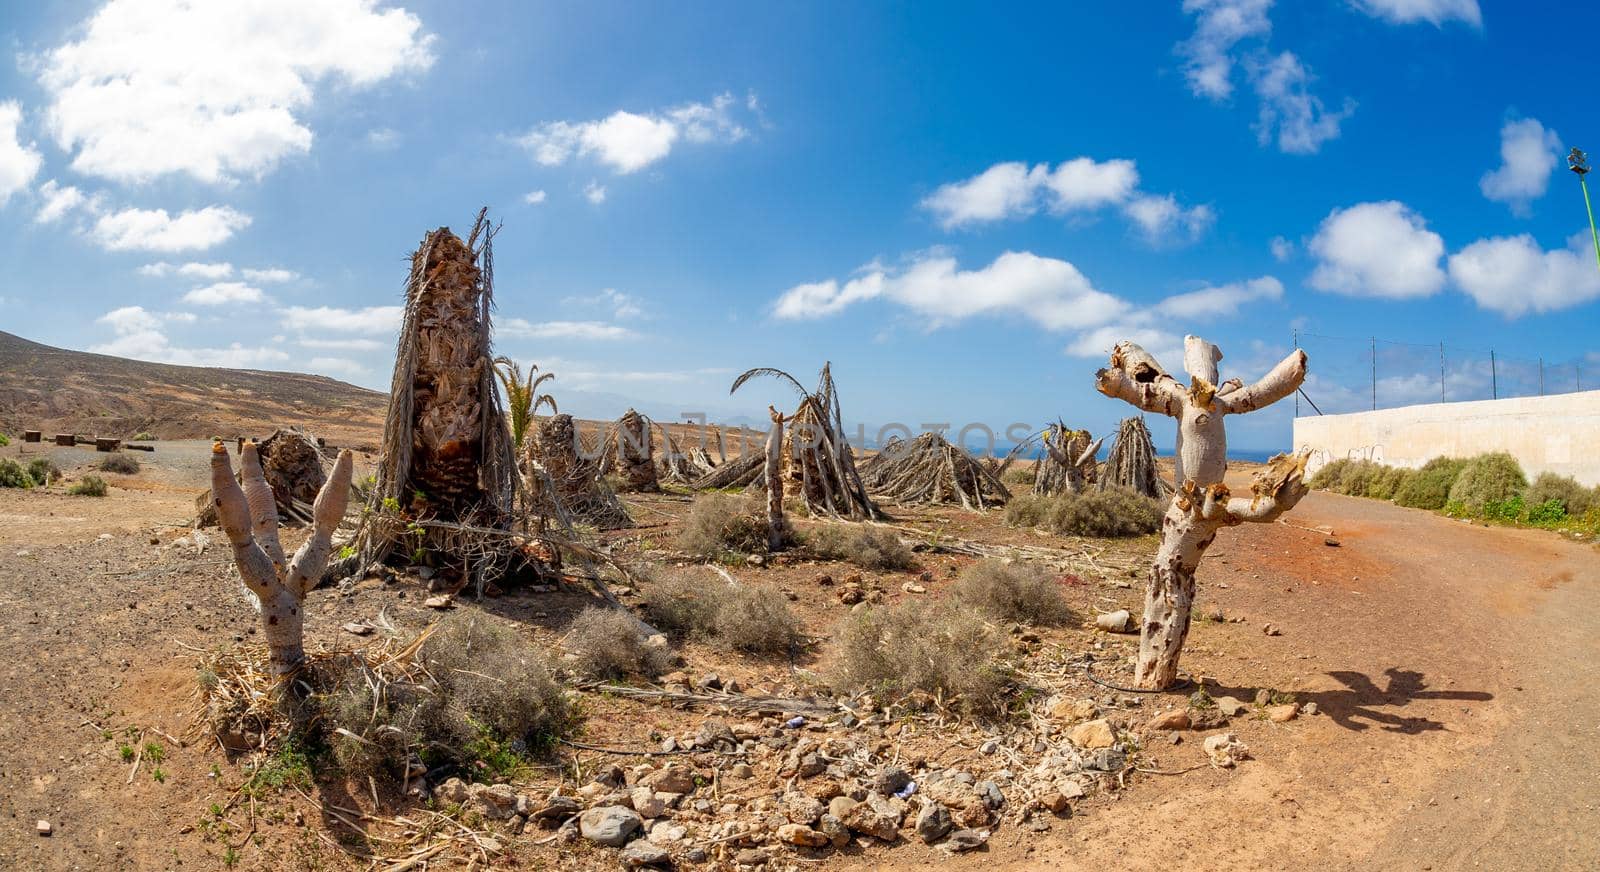 Gran Canaria, Canary Islands, La Isleta peninsula, Montana las Coloradans natural background